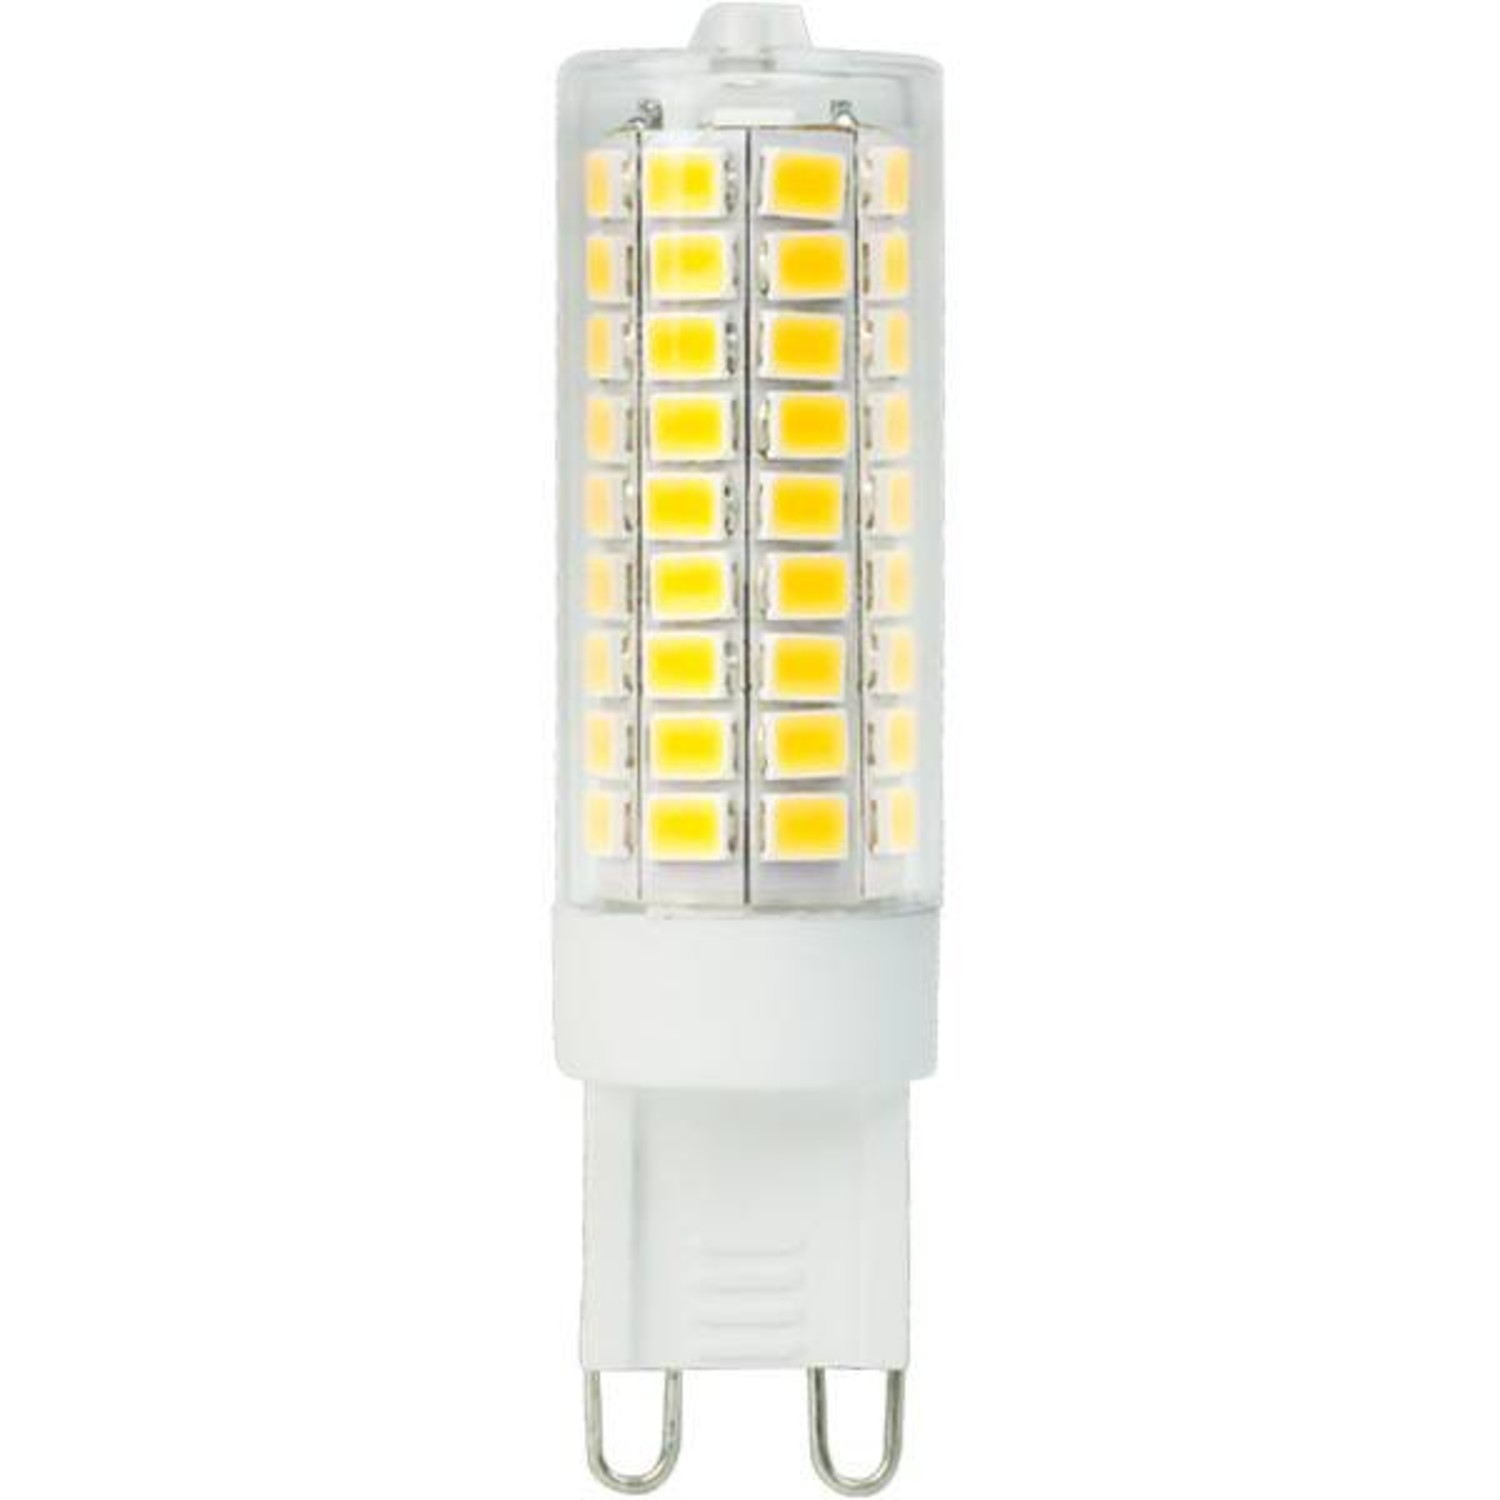 Aanbeveling Bewijs droogte LED G9 - 4W vervangt 35W - 2700K warm wit licht - 15x50 mm -  Ledlichtdiscounter.nl